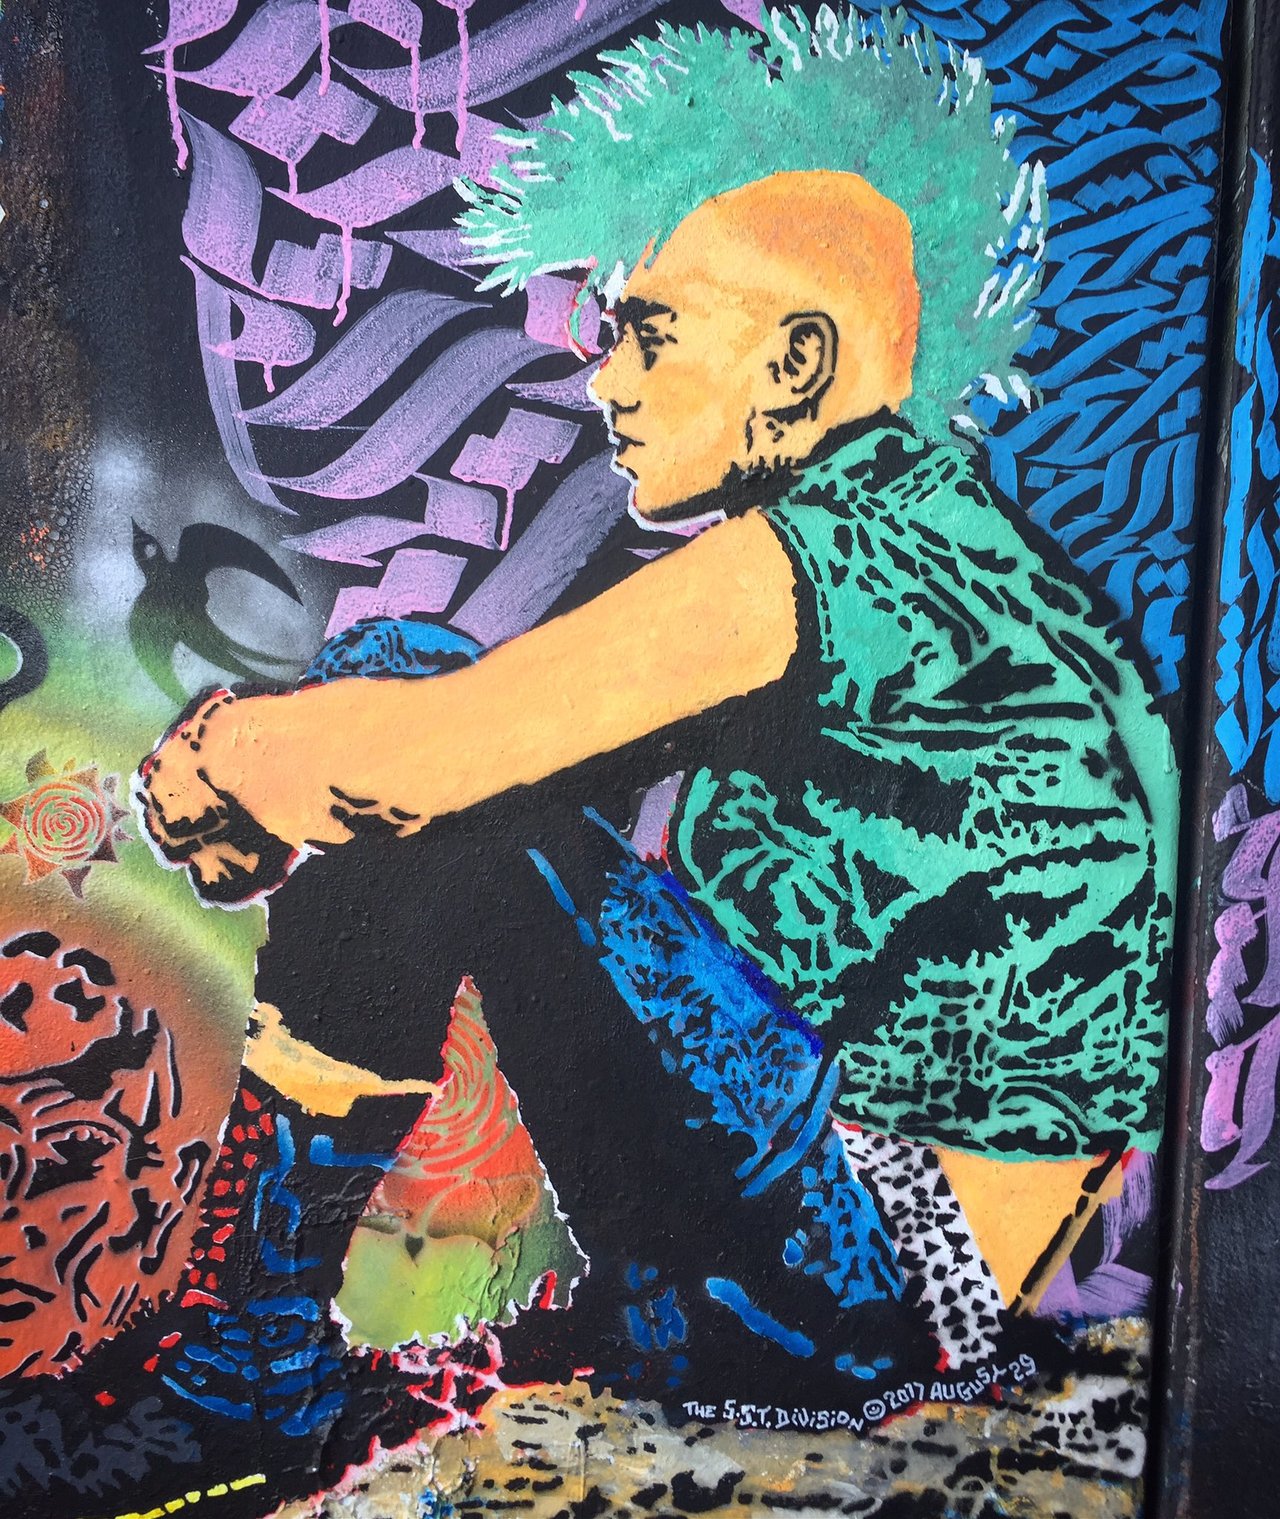 NO FUTURE by #SSTDivision #stencil #punk #nofuture #streetart #graffiti #graff #spray #bombing #sprayart #wall #urbanart #urbanwalls https://t.co/wyxYYLuBej